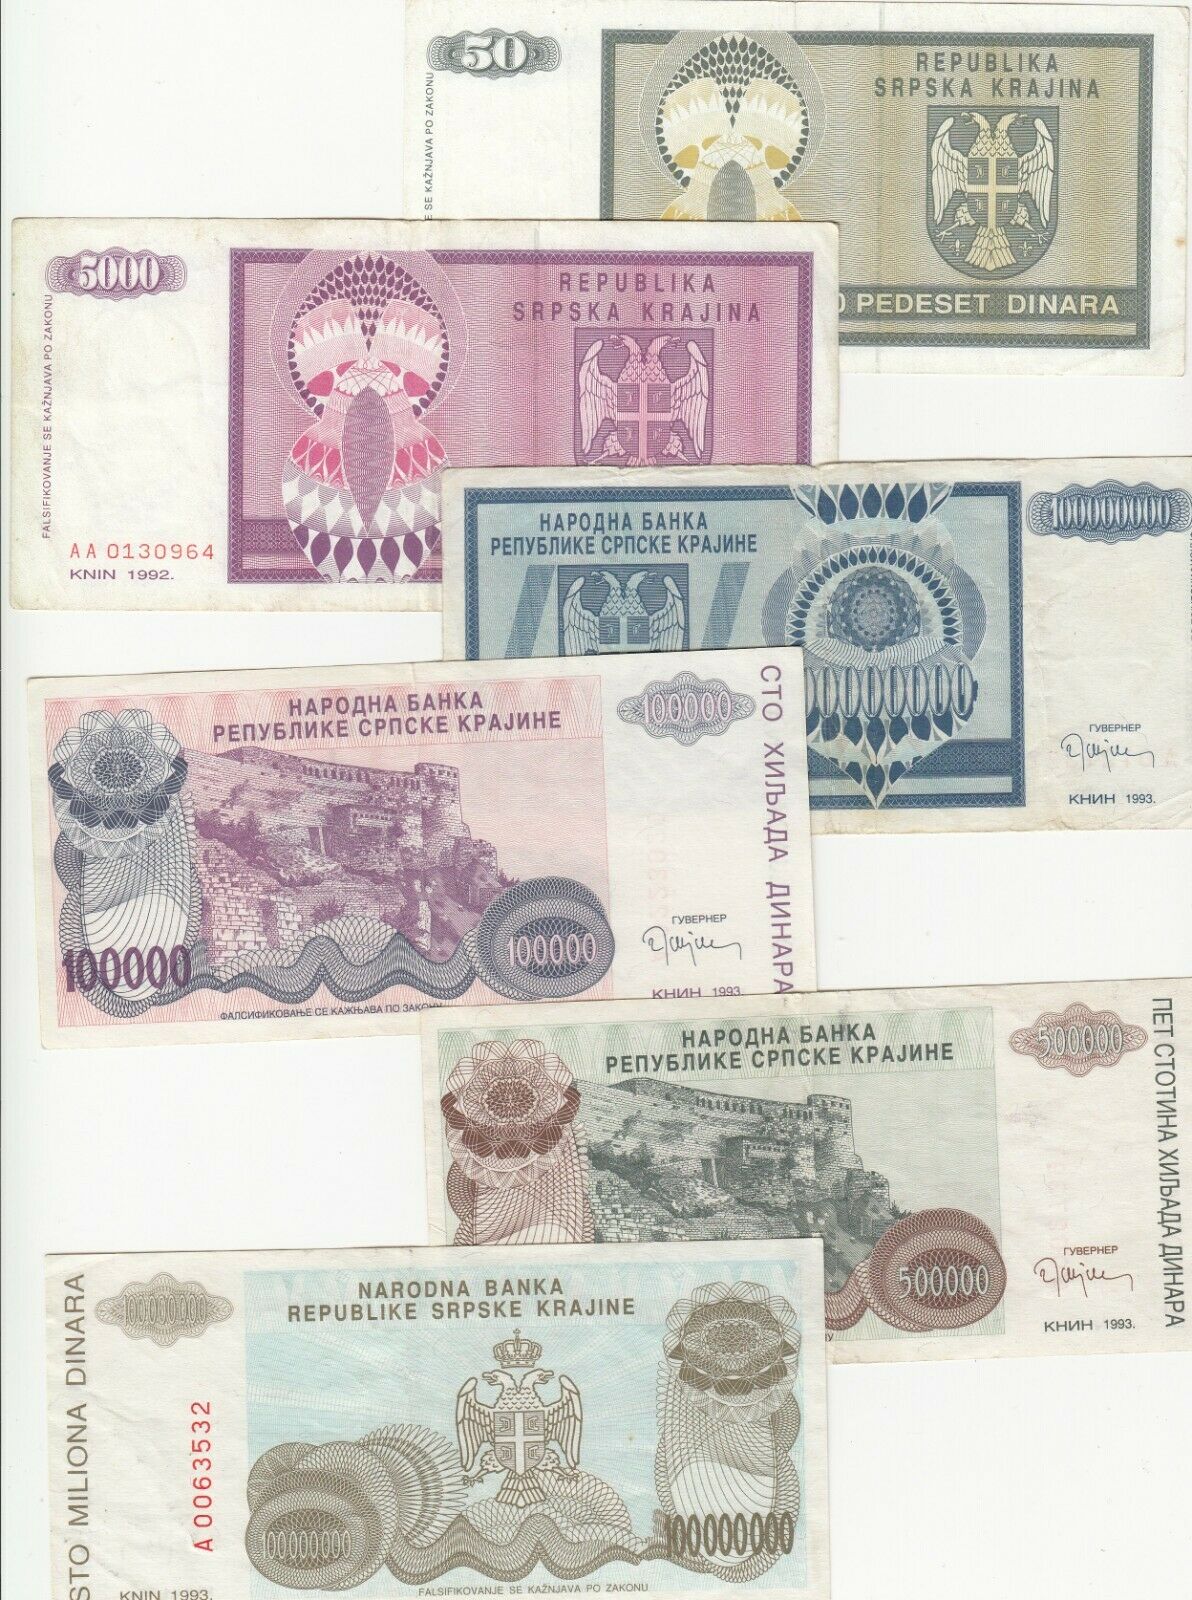 6 Banknote Paper Money Republic Of Serbian Krajina Dinar Dinars 1992 1993